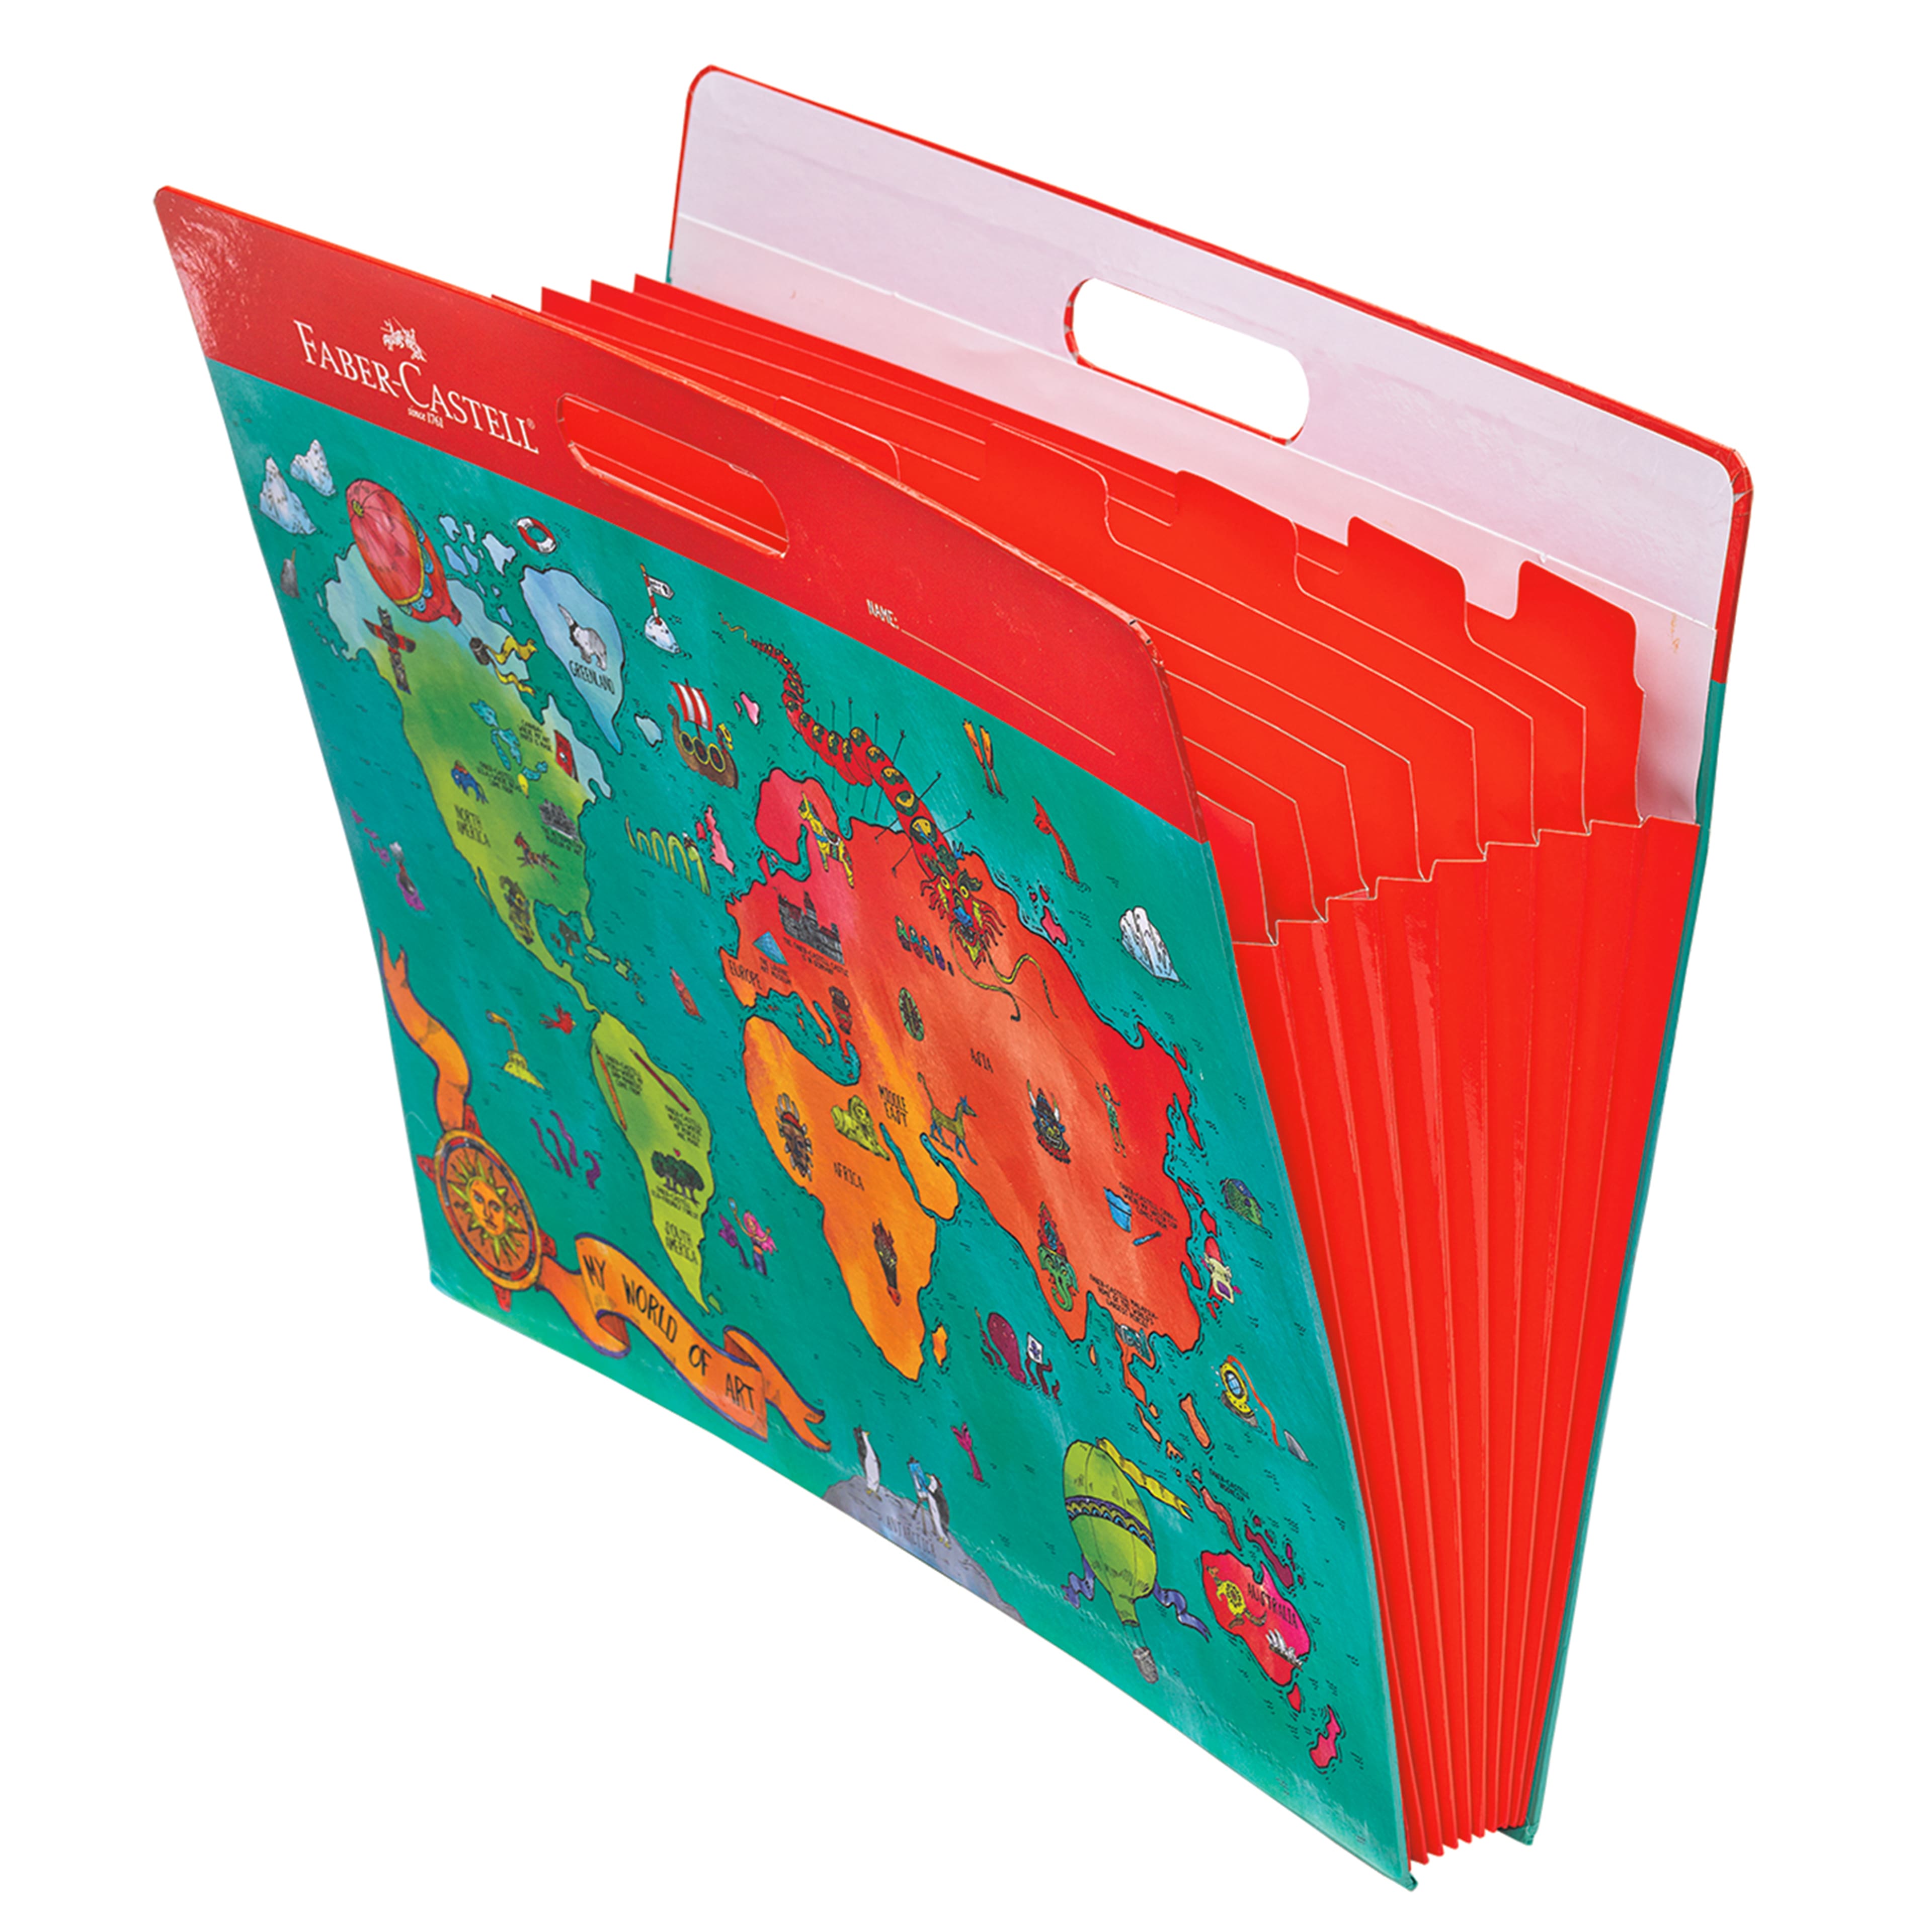 Faber-Castell My World of Art Portfolio for Kids - 8 Expandable Folder  Pockets for Kid's Artwork and Keepsakes